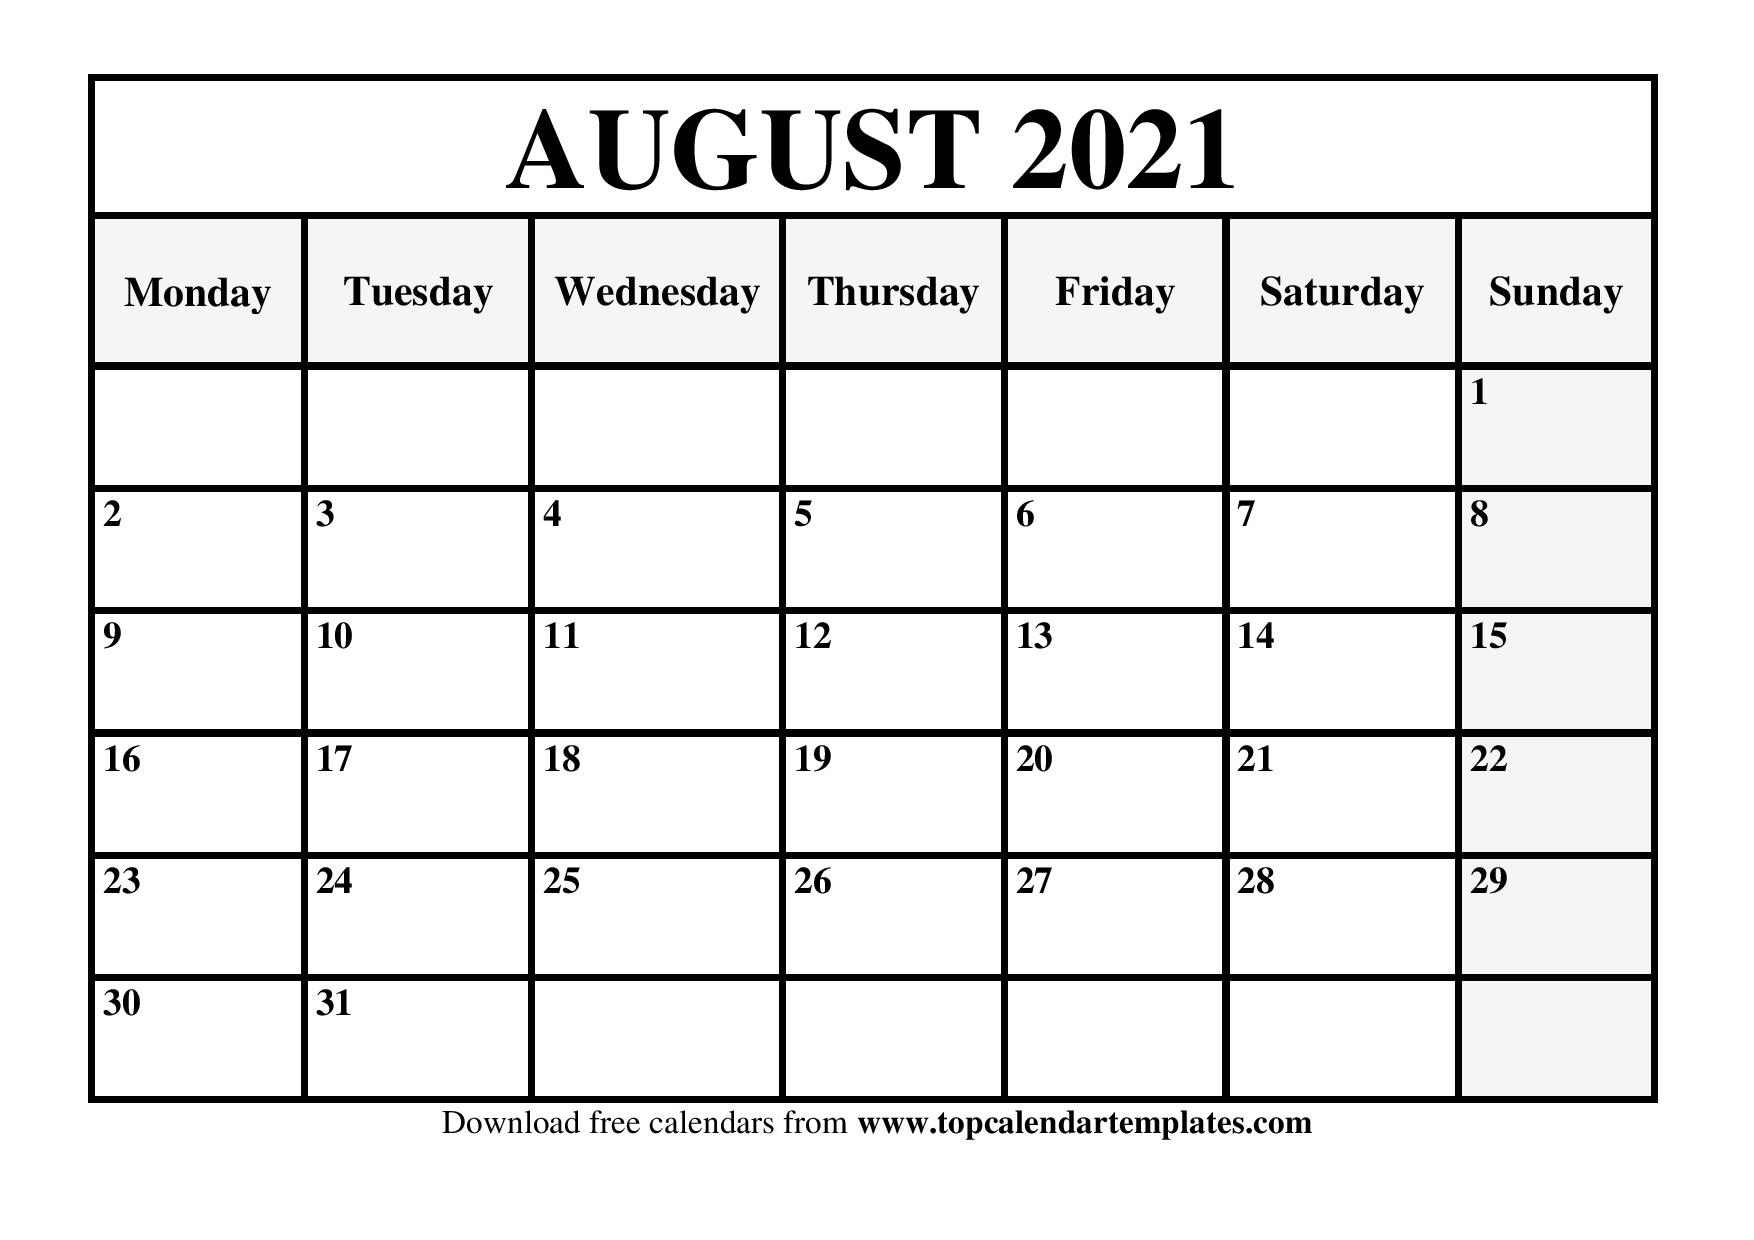 August 2021 Printable Calendar - Monthly Templates August 2021 Calendar Reading